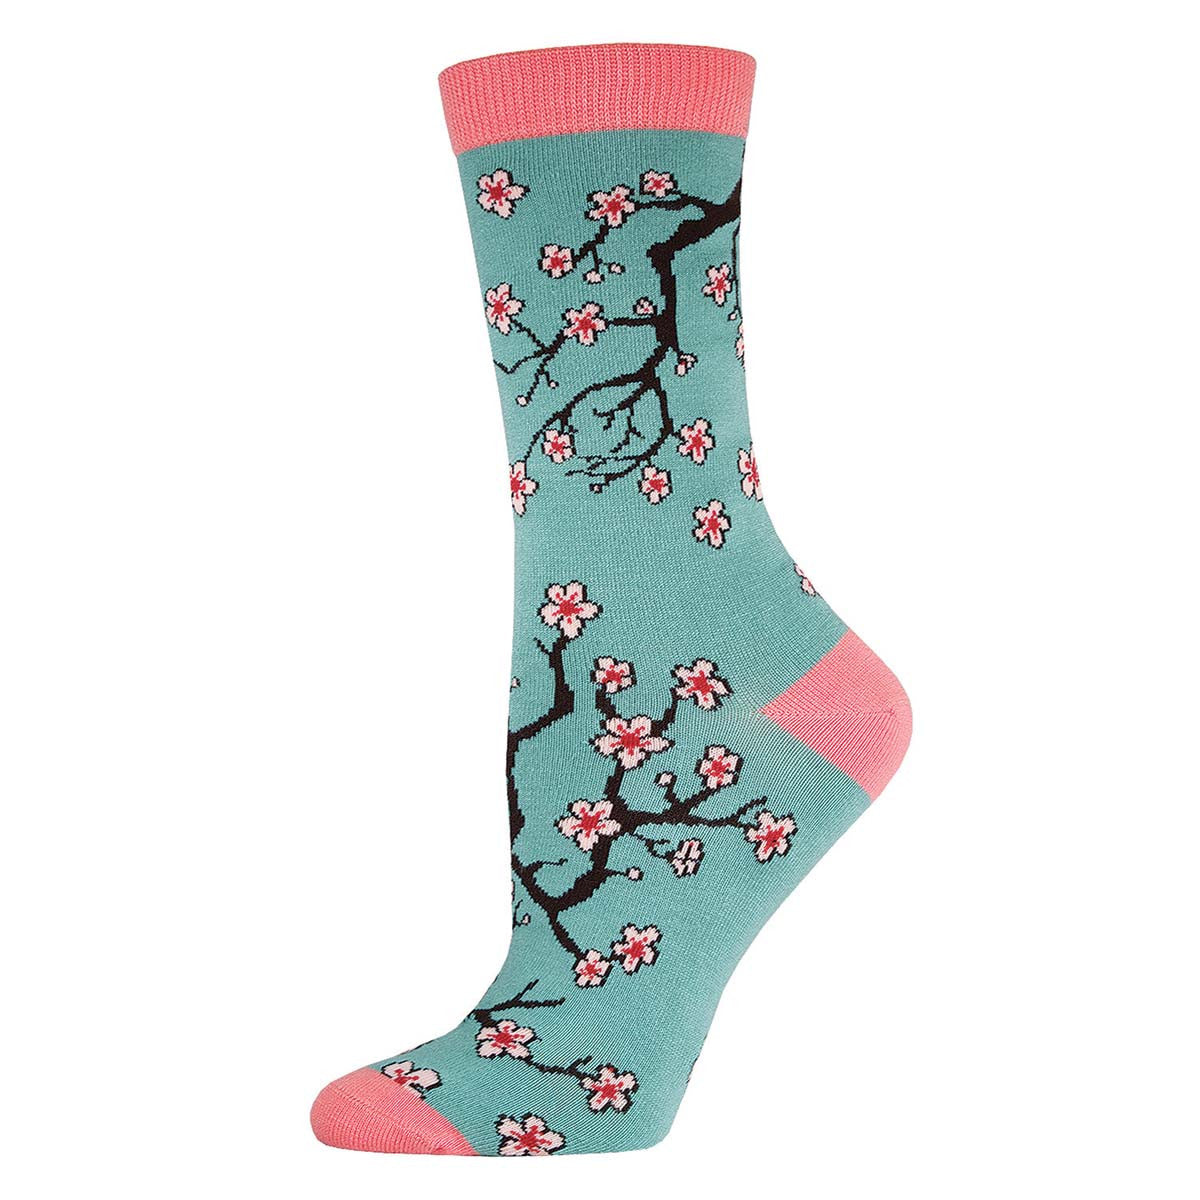 Socksmith Cherry Blossoms Crew Socks - YOUAREMYPOISON